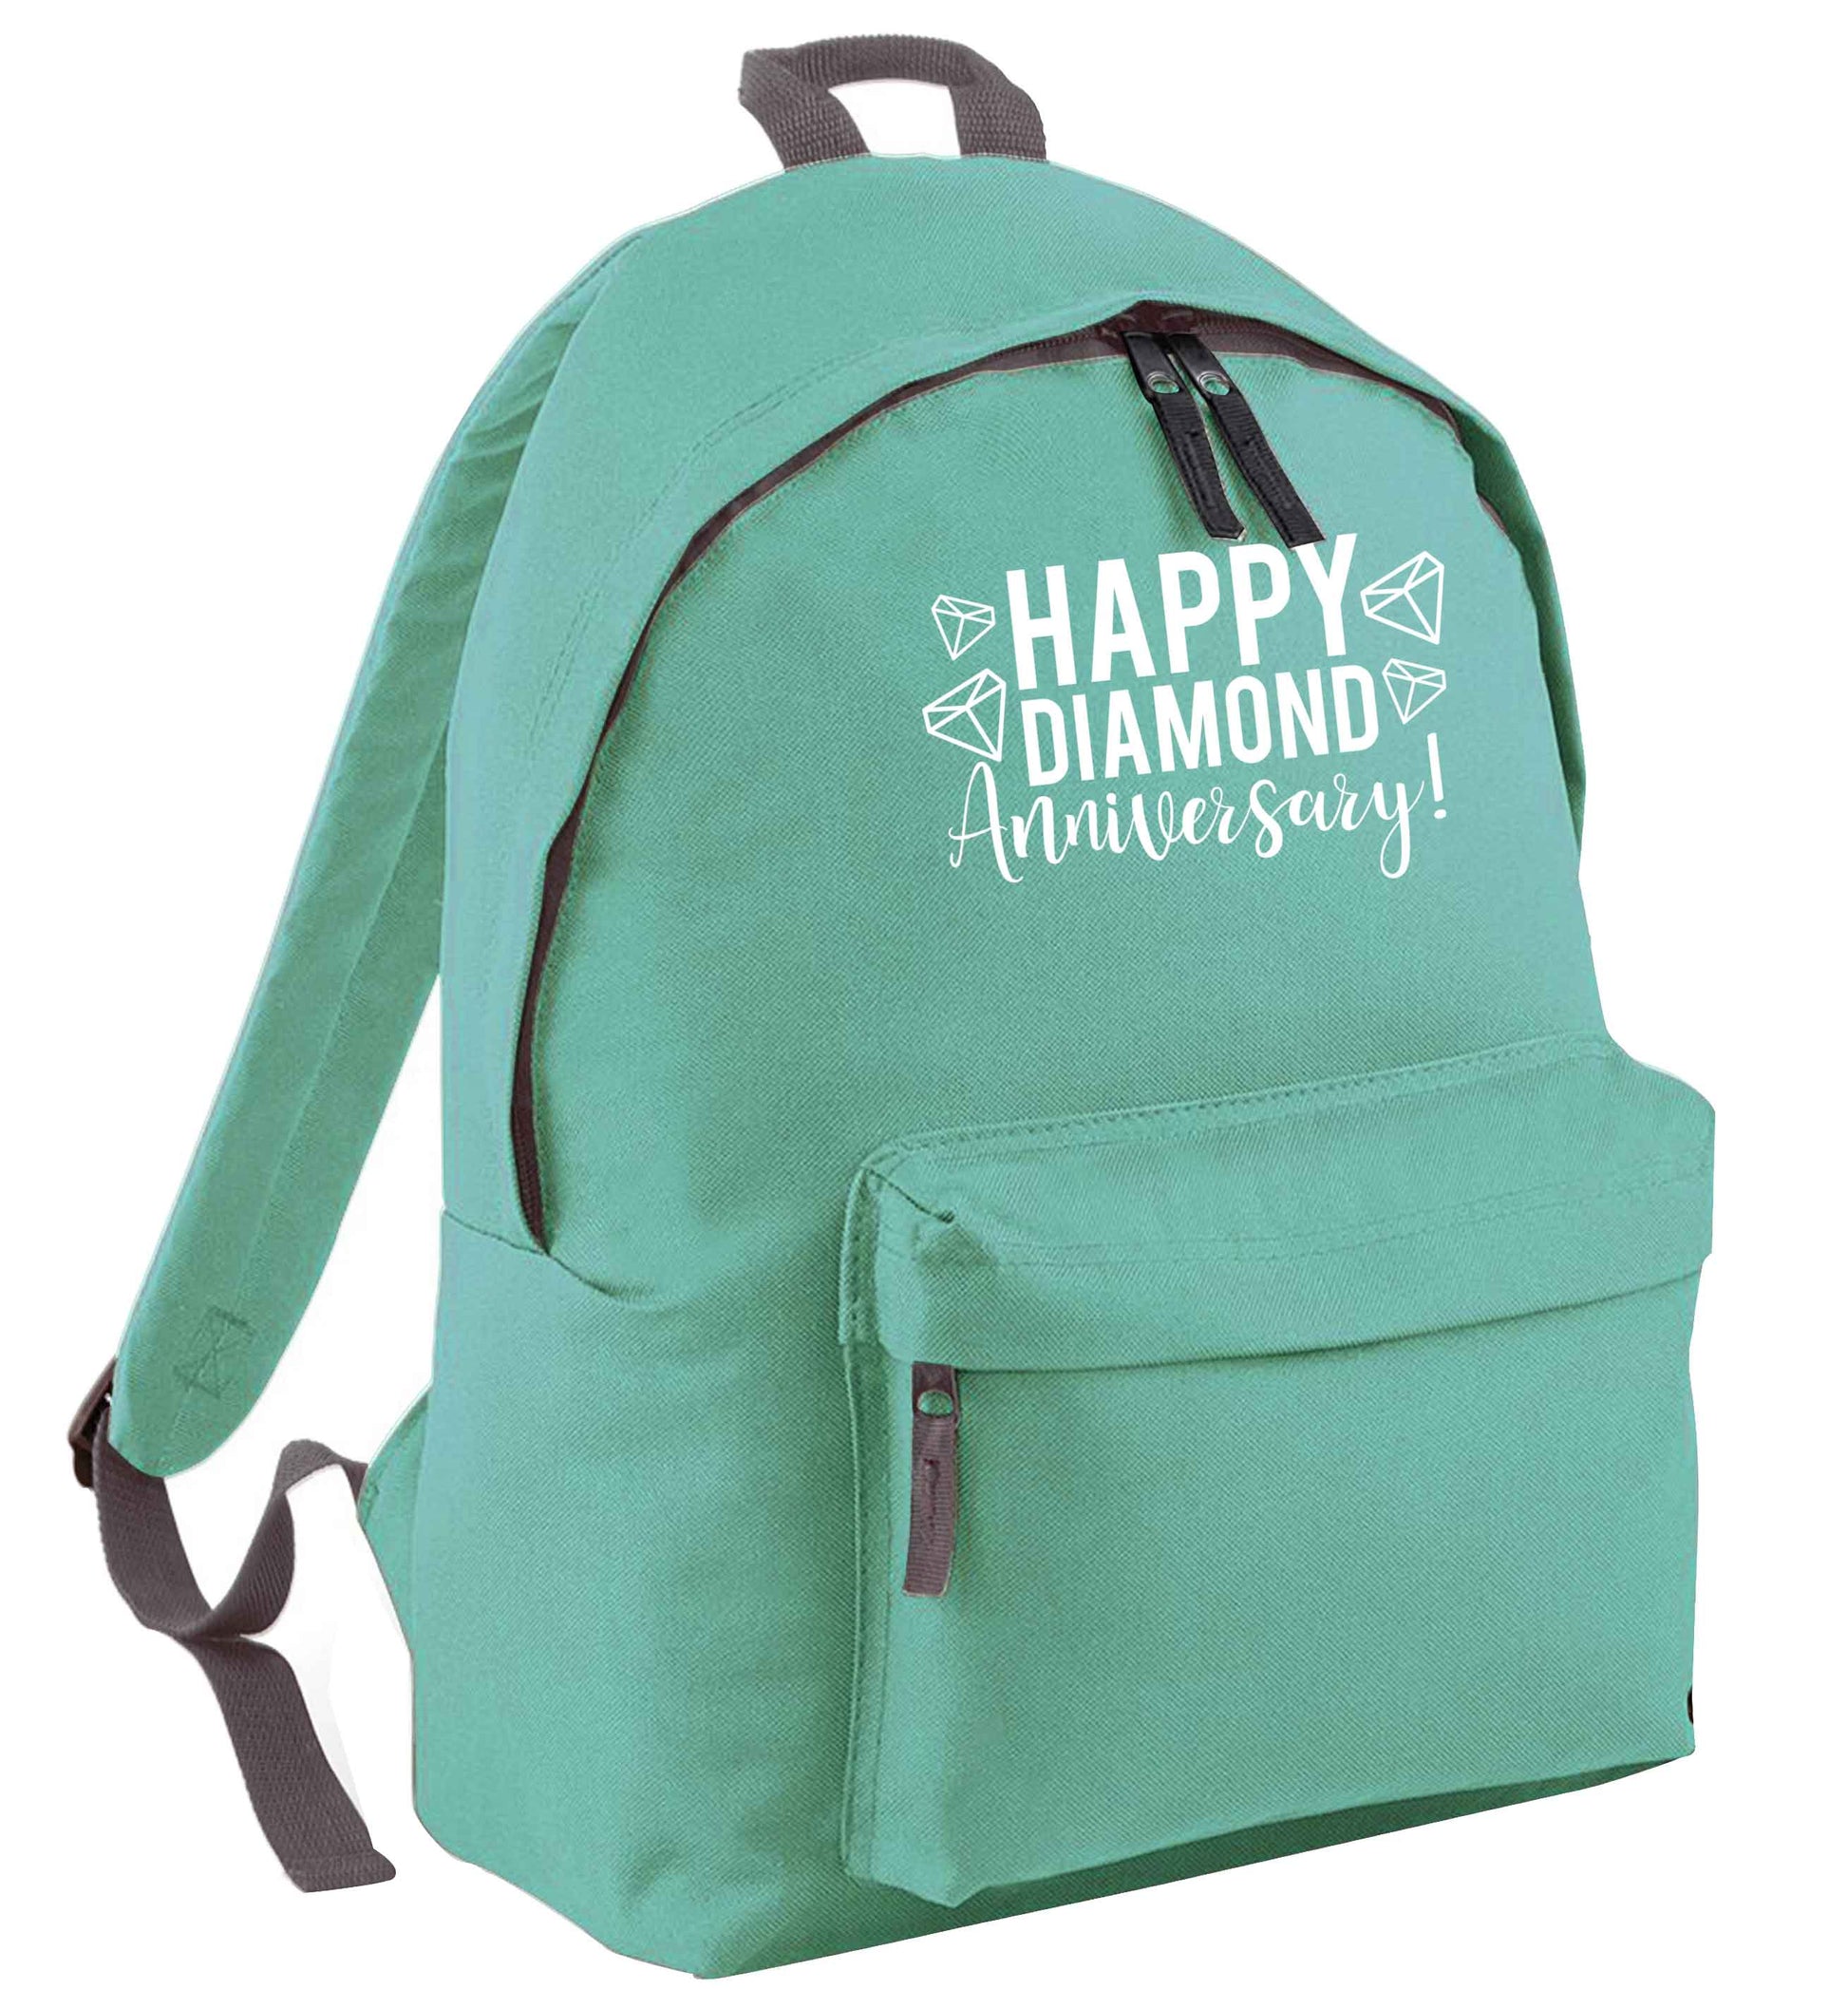 Happy diamond anniversary! mint adults backpack